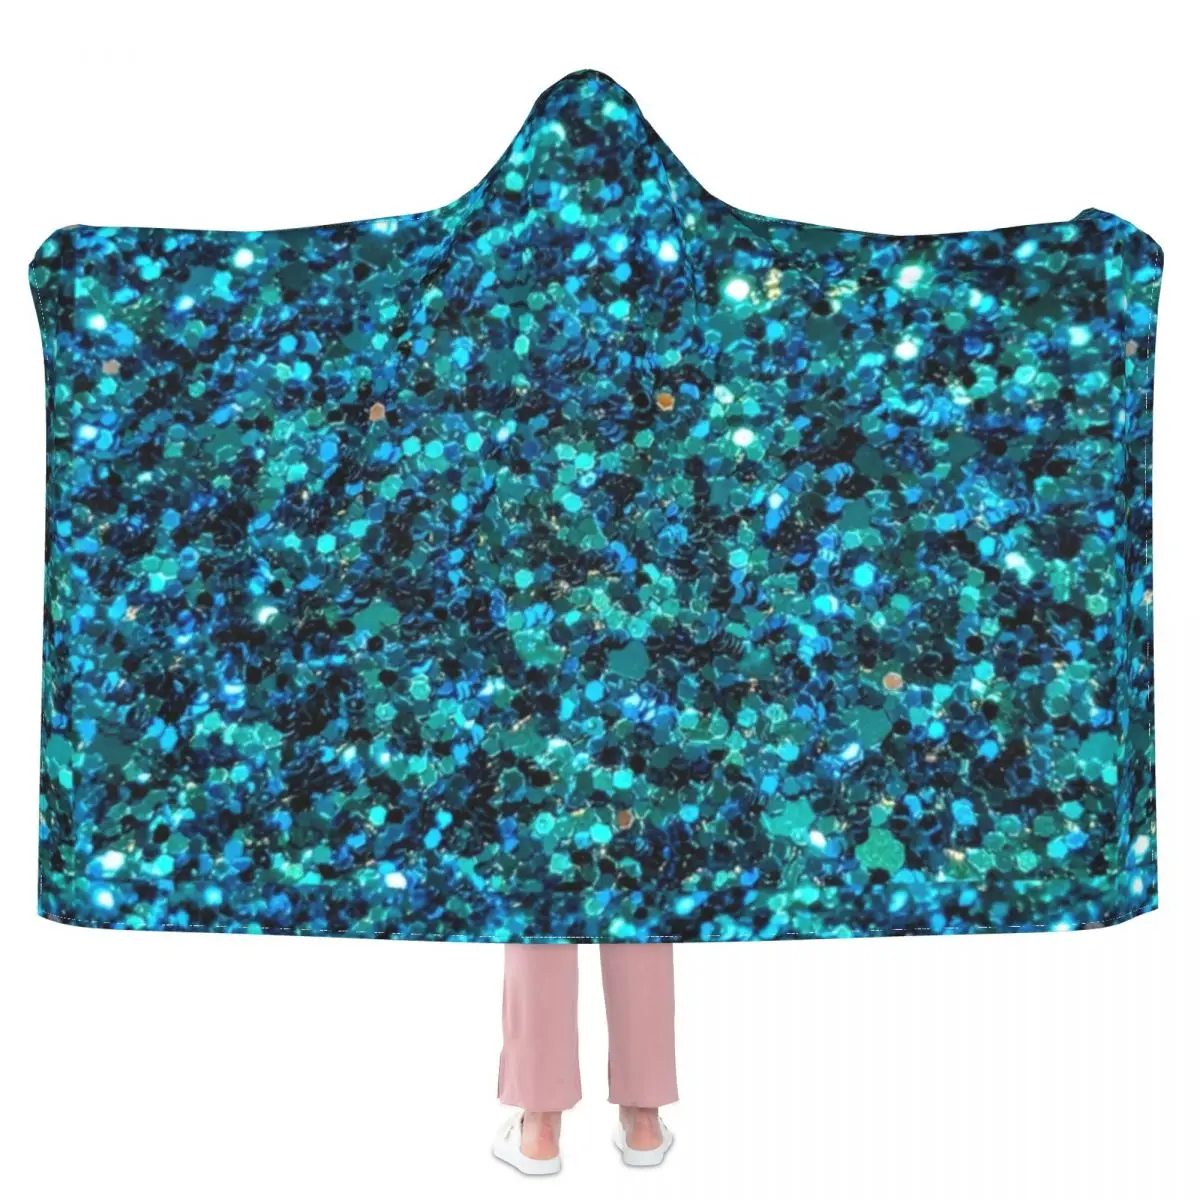 Sequins Artwork Blanket Blue Sparkling Print Cheap Funny Hooded Bedspread Fleece For Photo Shoot Soft Blanket